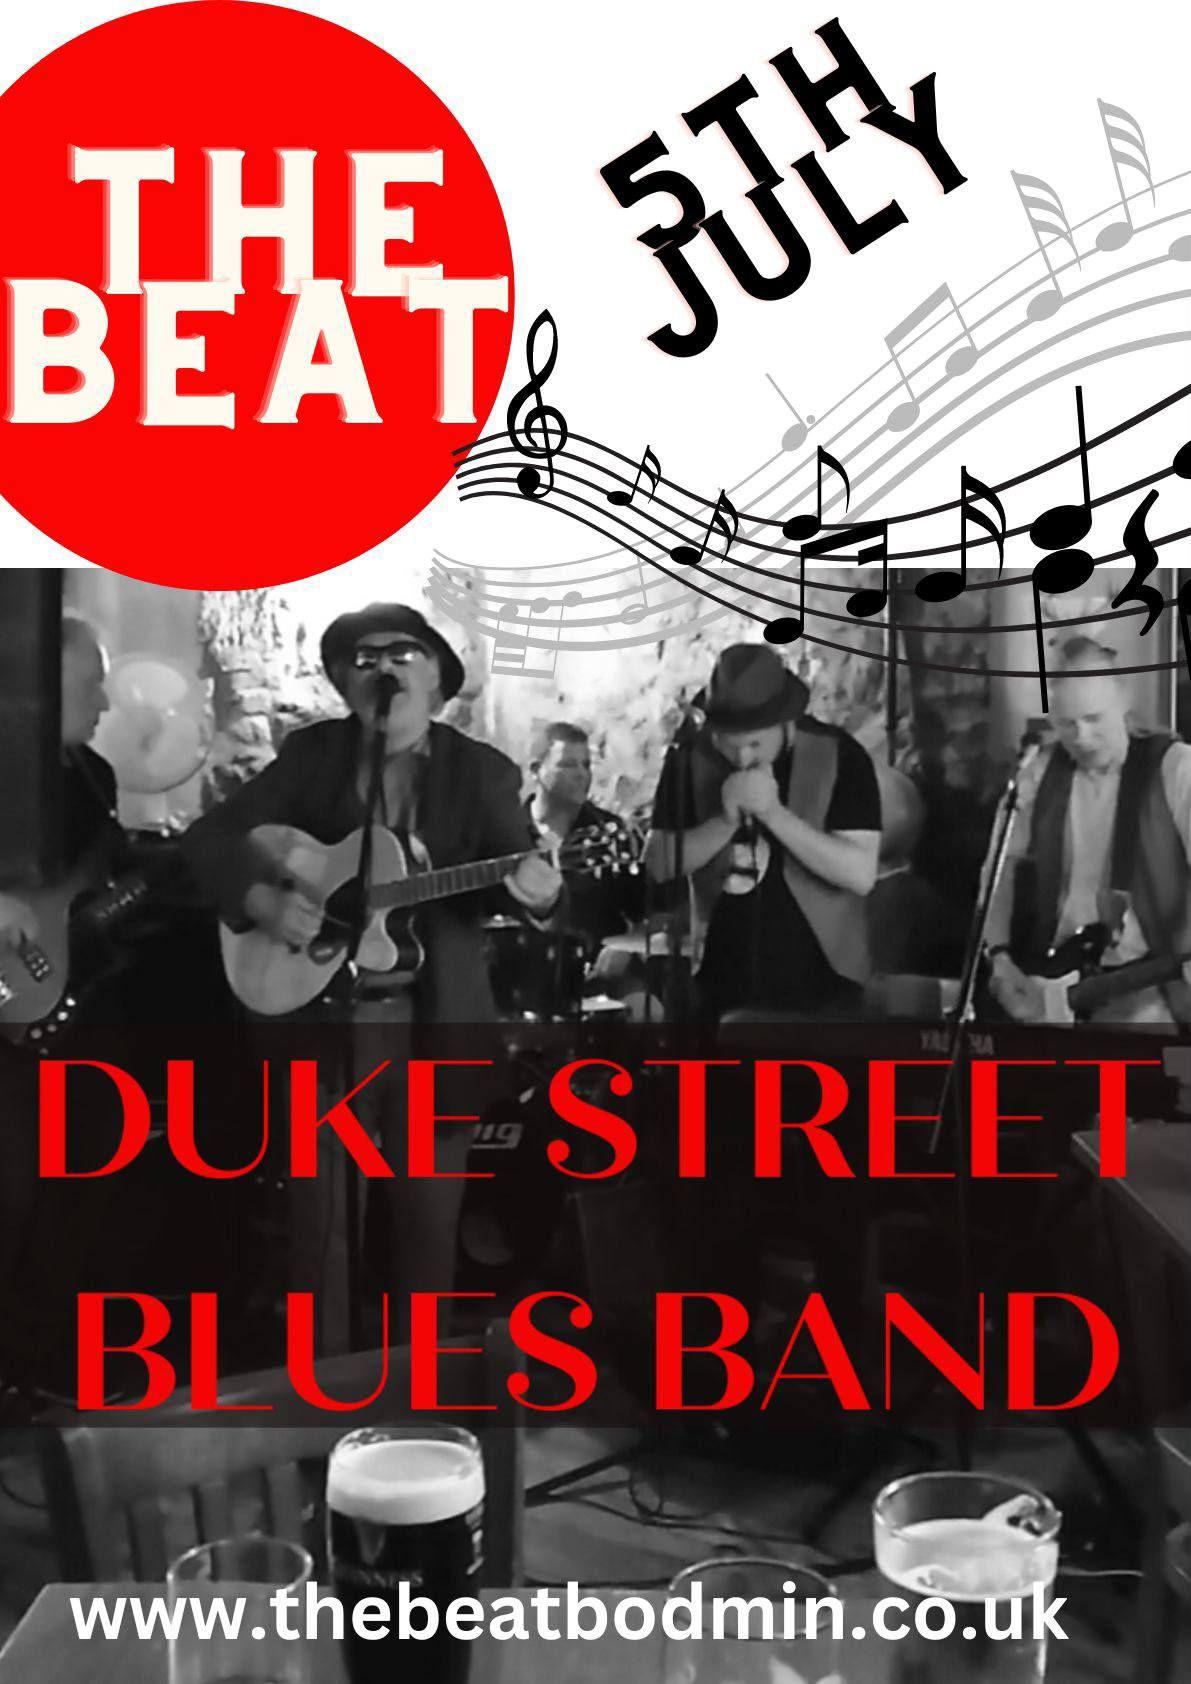 Duke street blues band